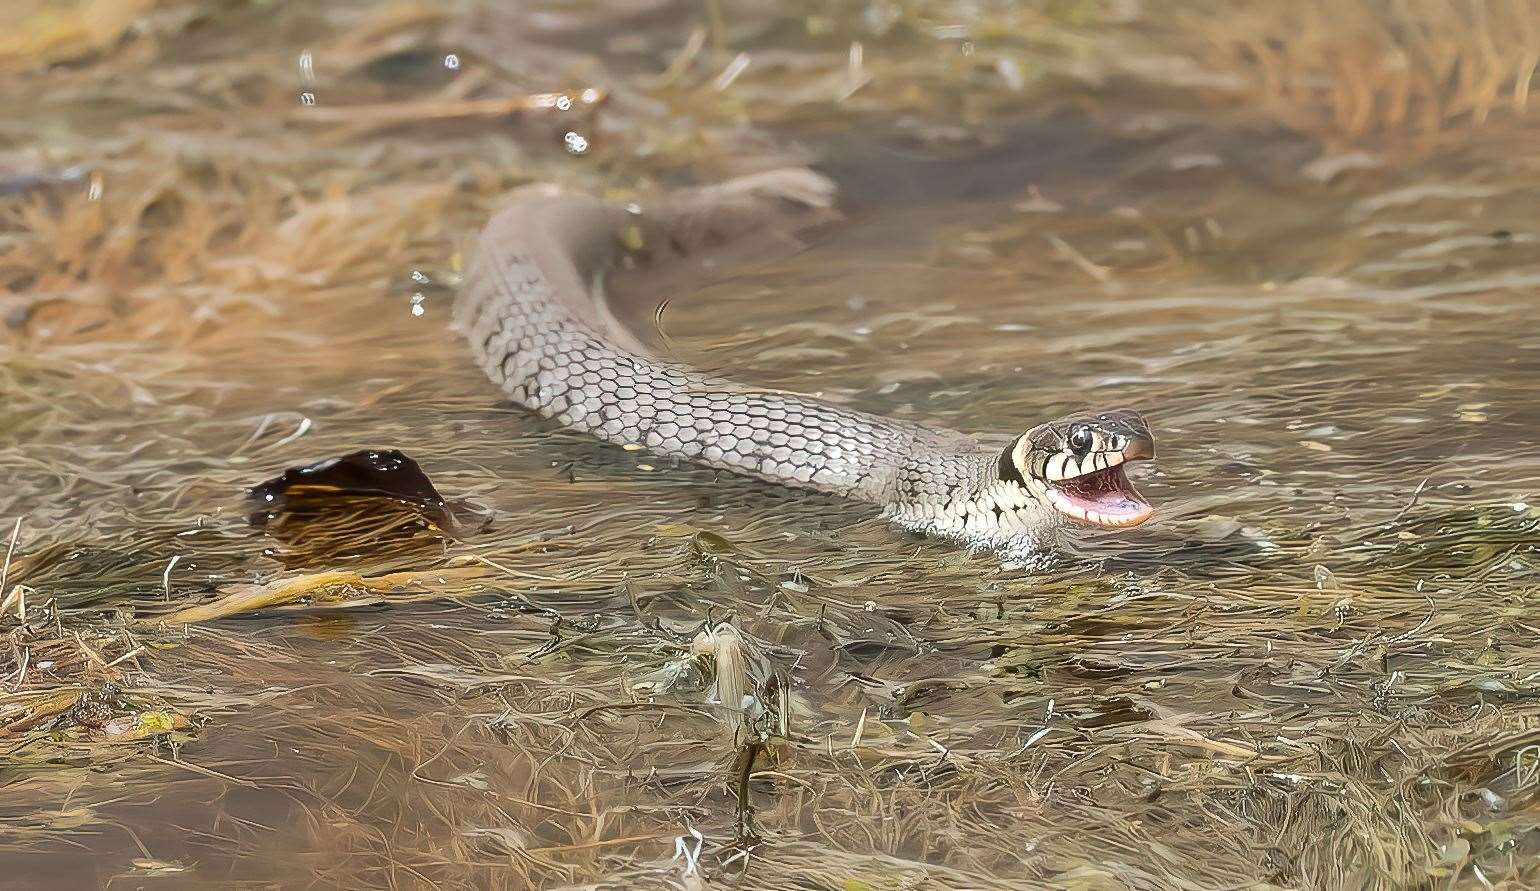 The grass snake was three feet long. Picture: Steve Cullum/Solent News